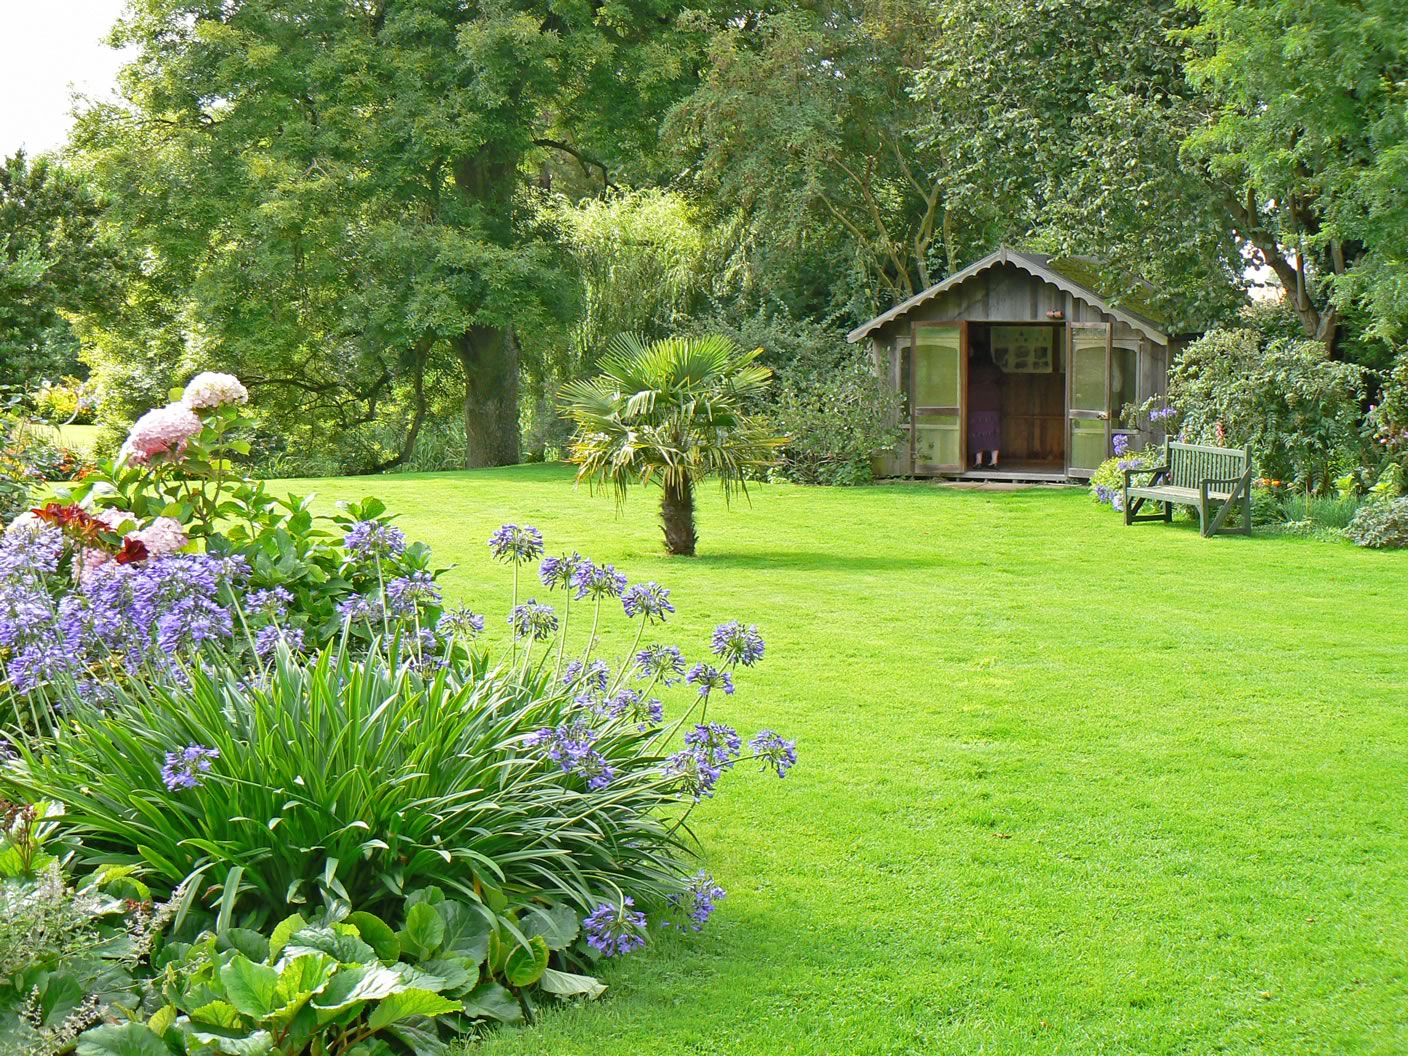 Small Summer House In The Garden - Comment Aménager Un Grand Jardin - HD Wallpaper 